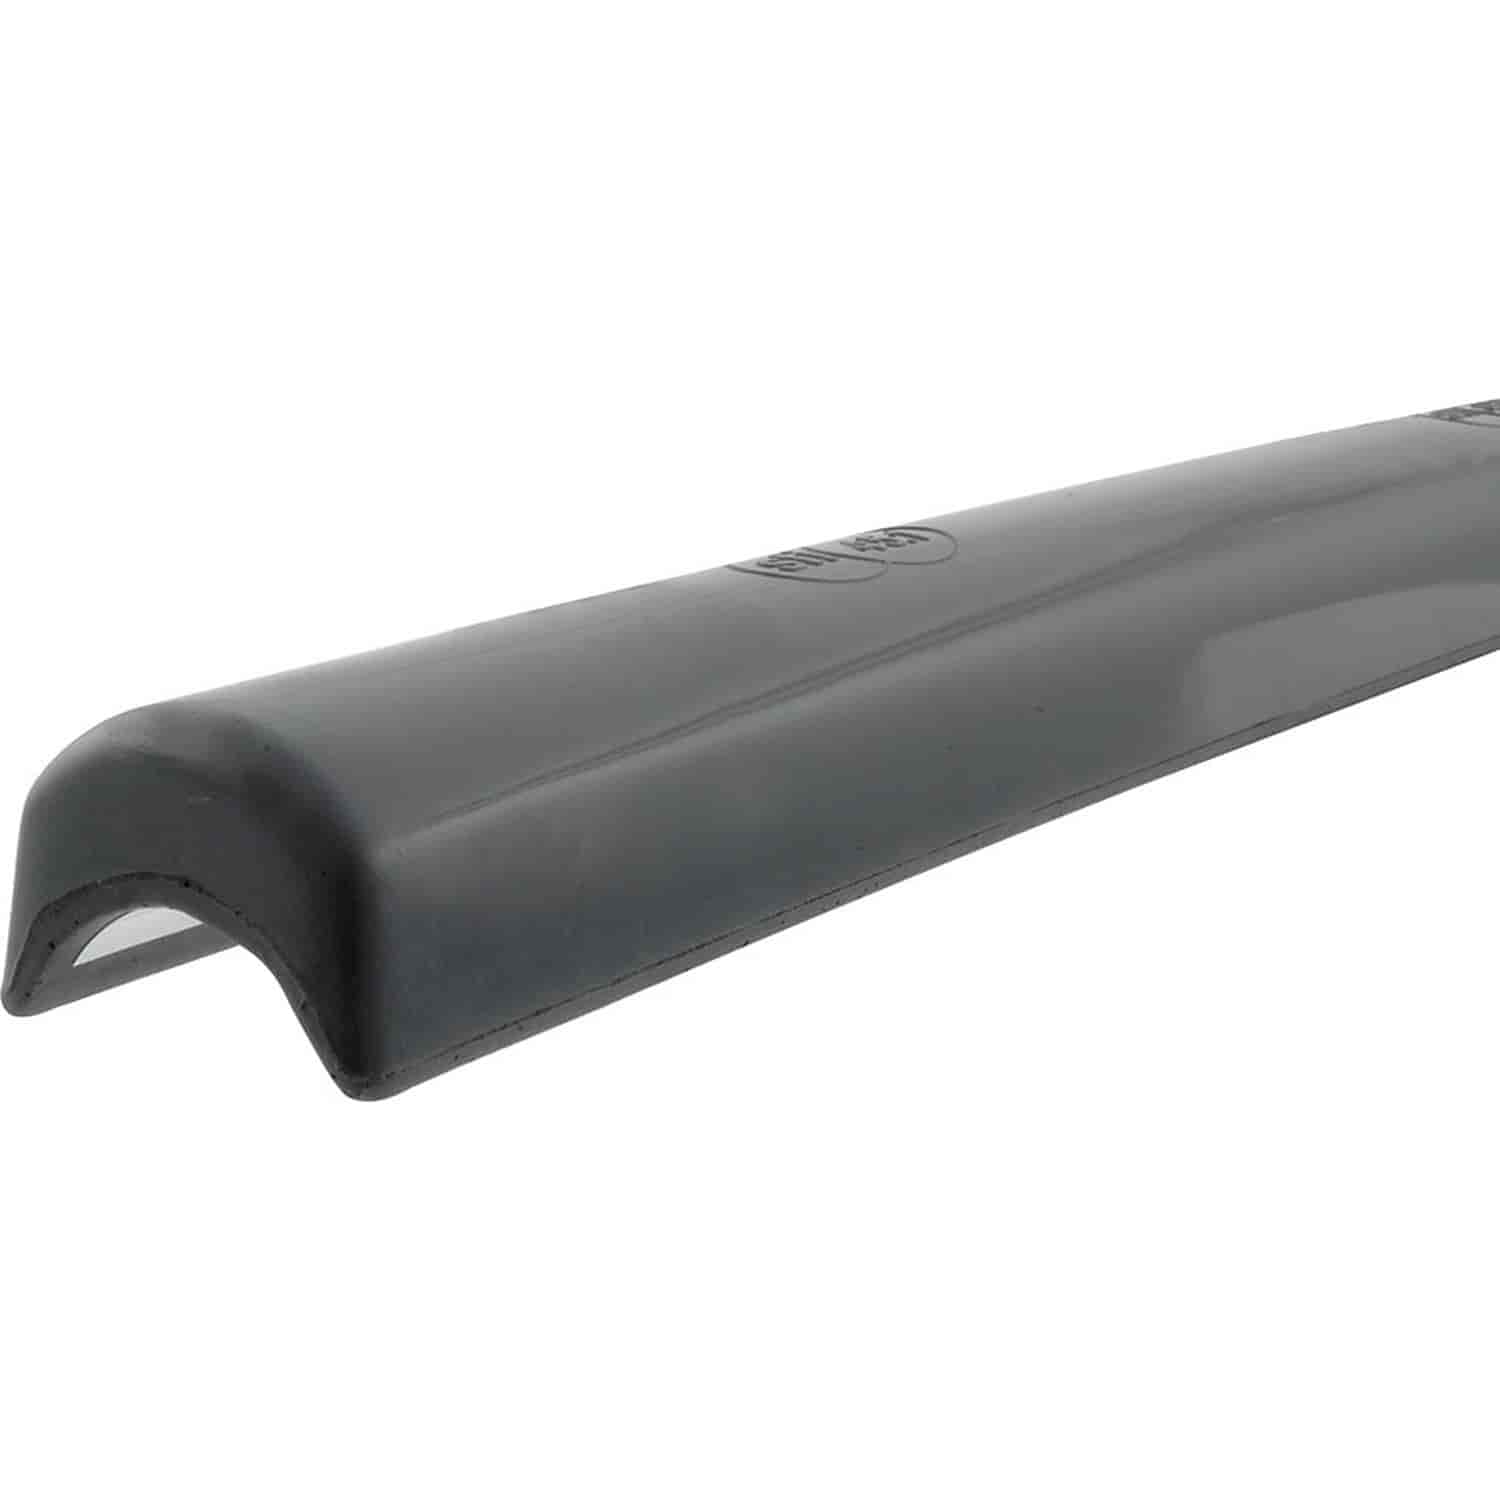 SFI Mini Roll Bar Padding Fits 1-1/4" to 1-3/4" OD Tubing